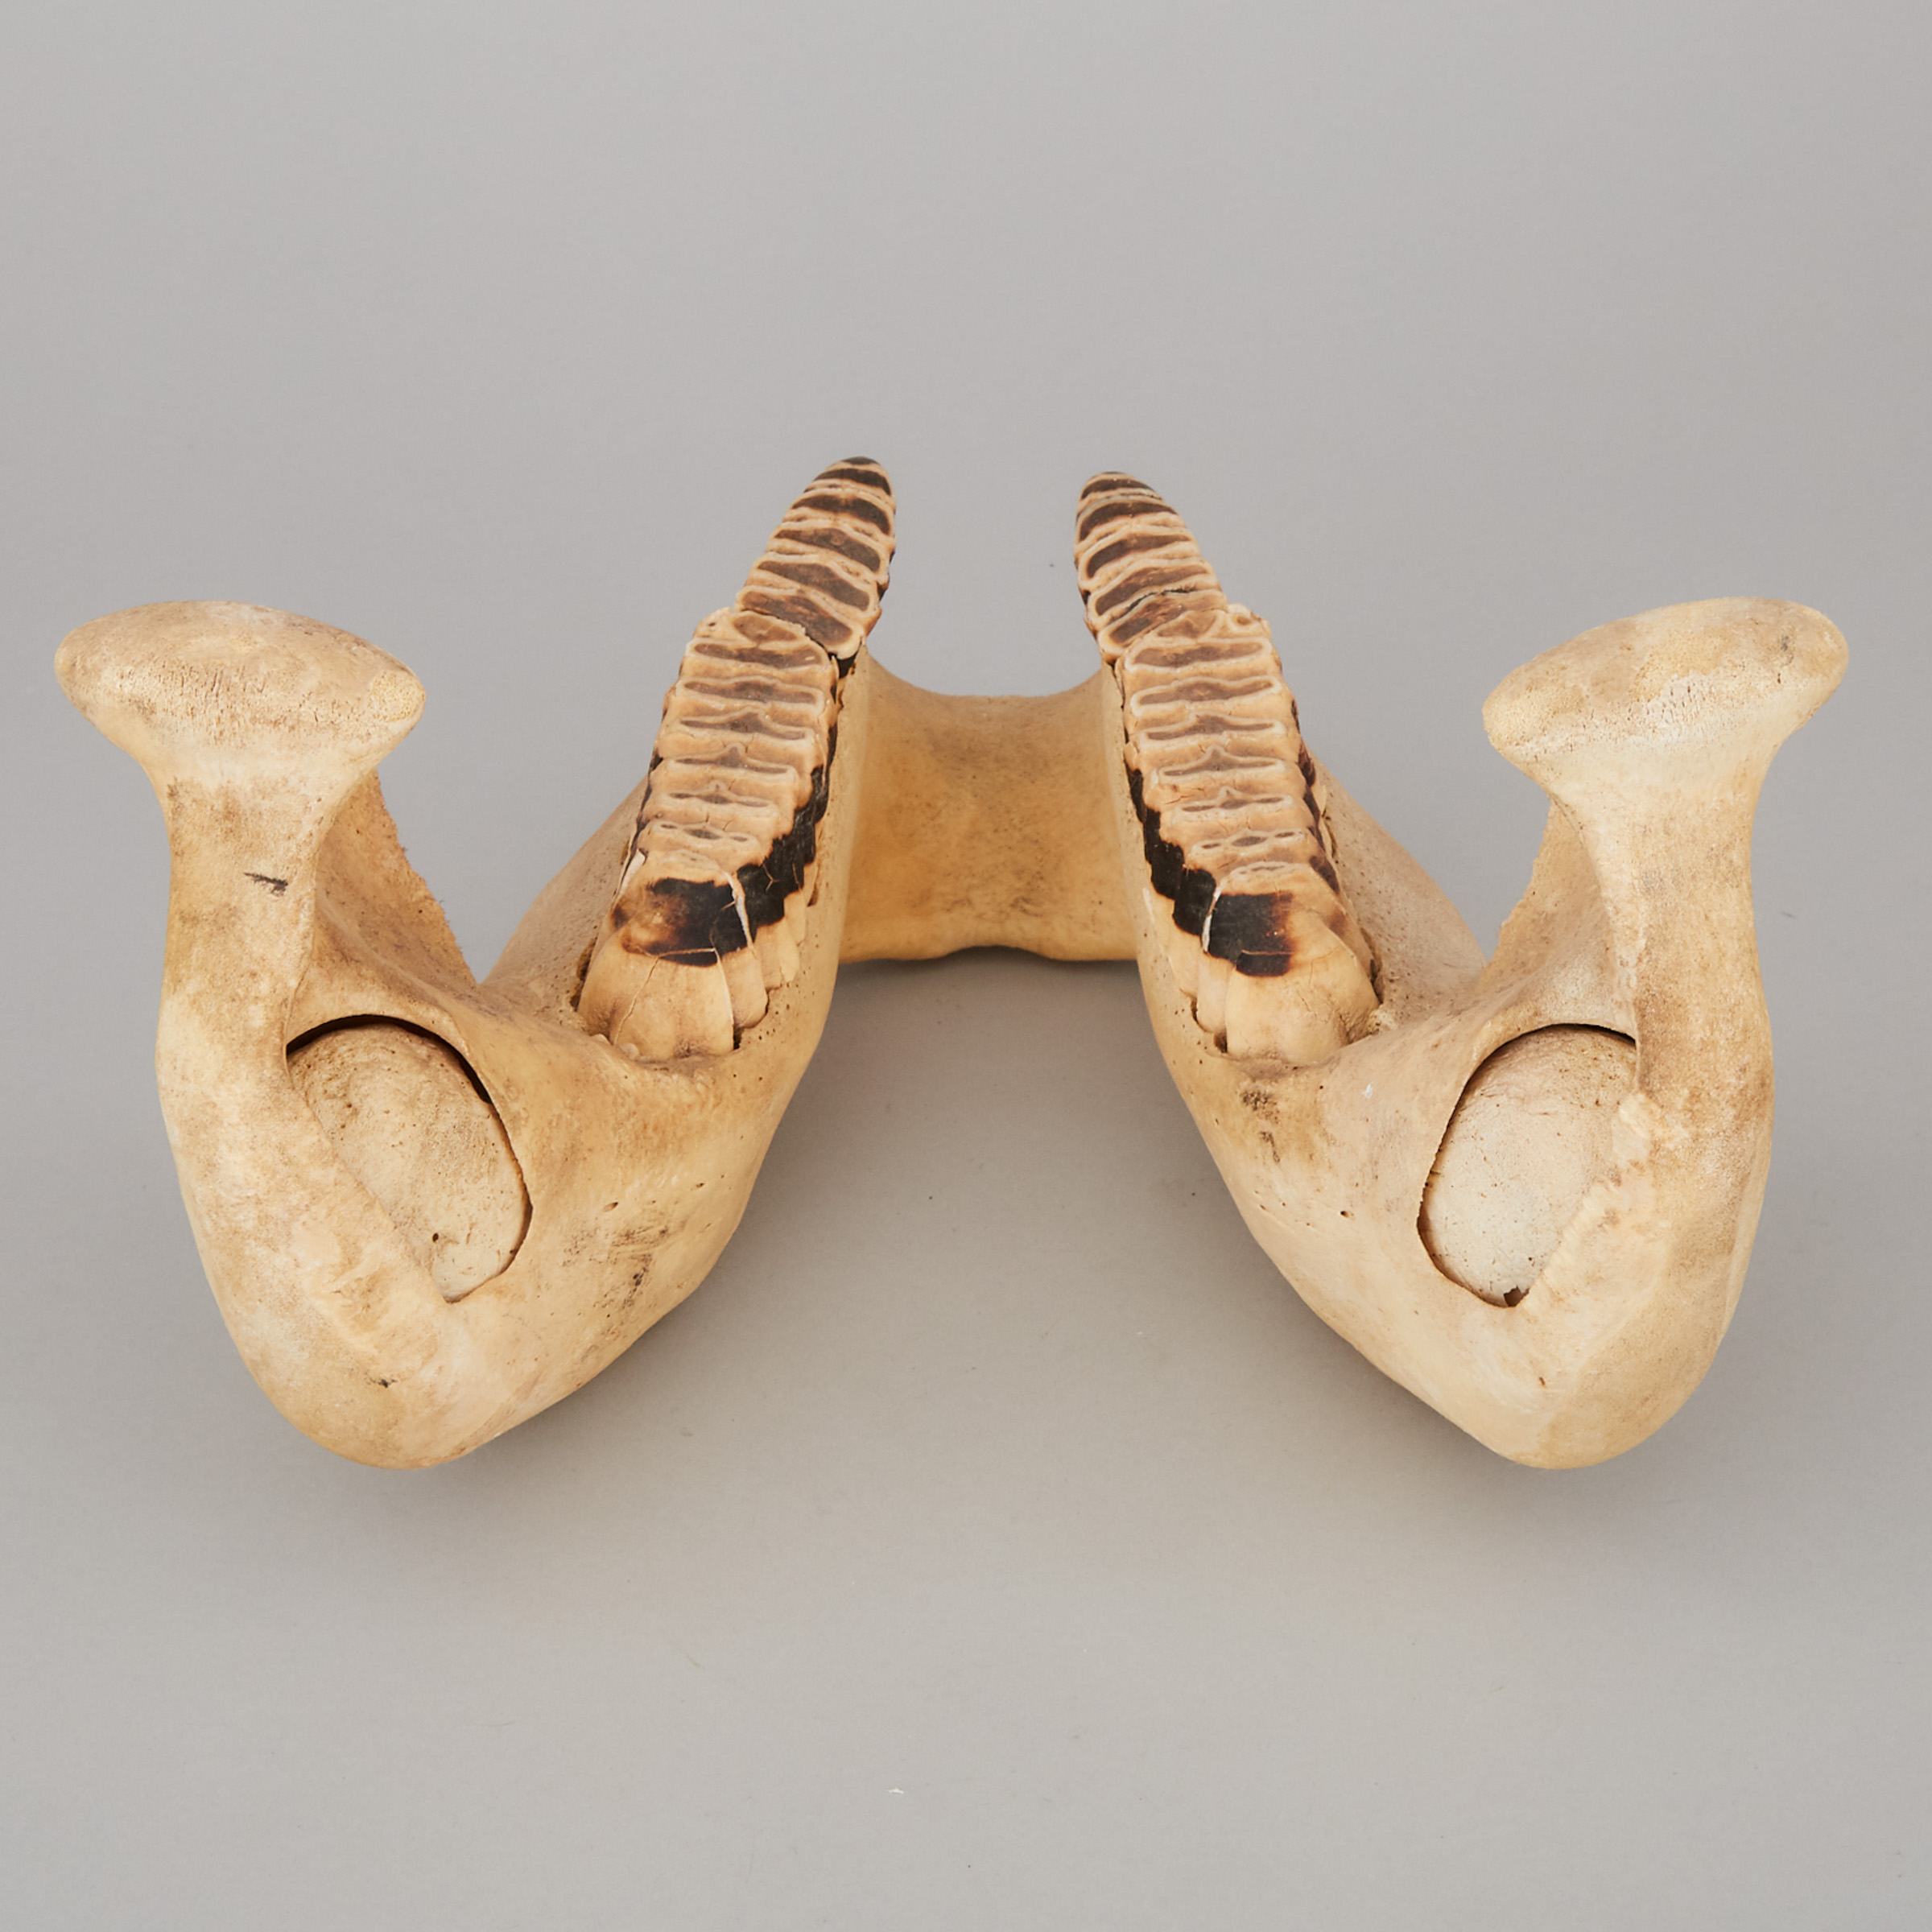 Juvenile Elephant Jawbone, early 20th century